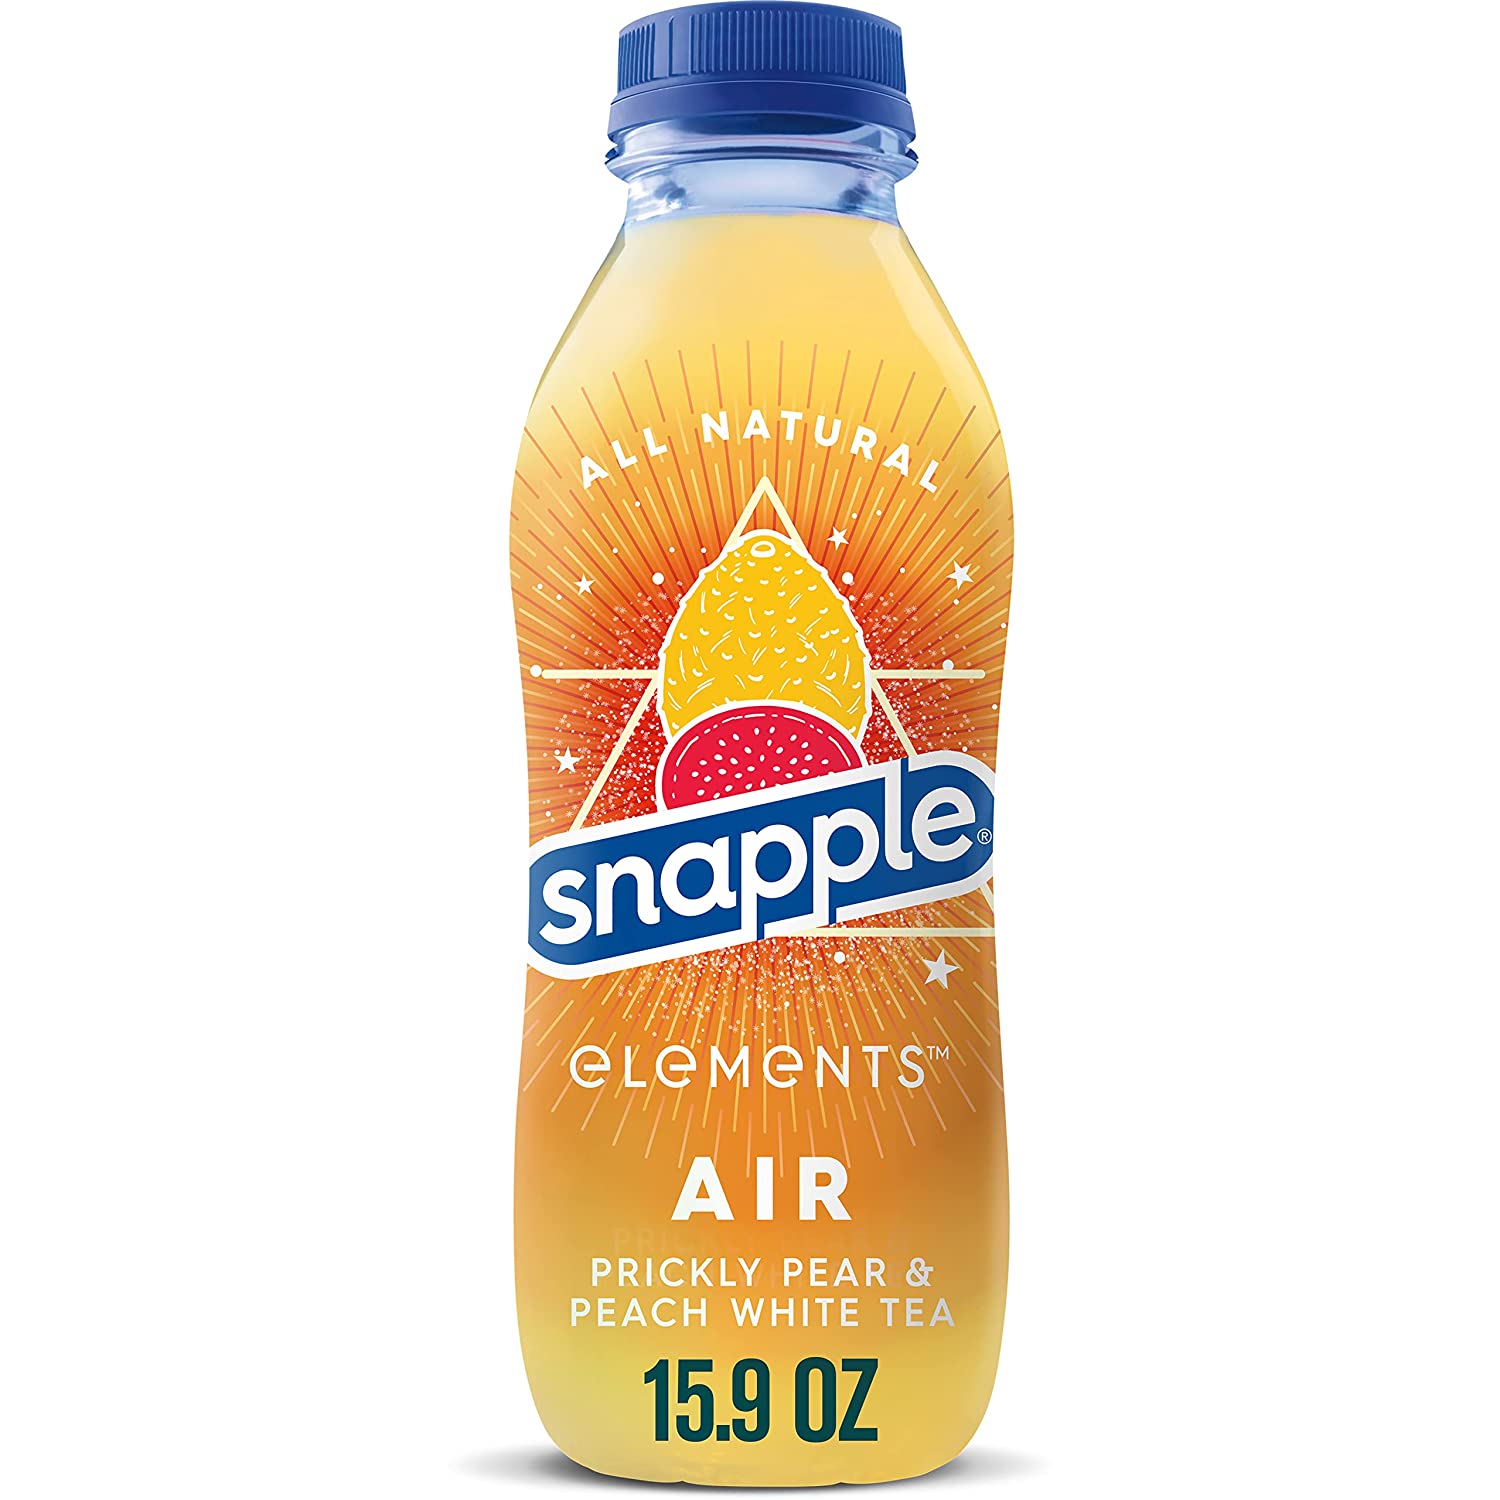 Snapple Element Air (Prickly Pear & Peach White Tea) 8, 16, or 24 Pack - drinkdrop.net